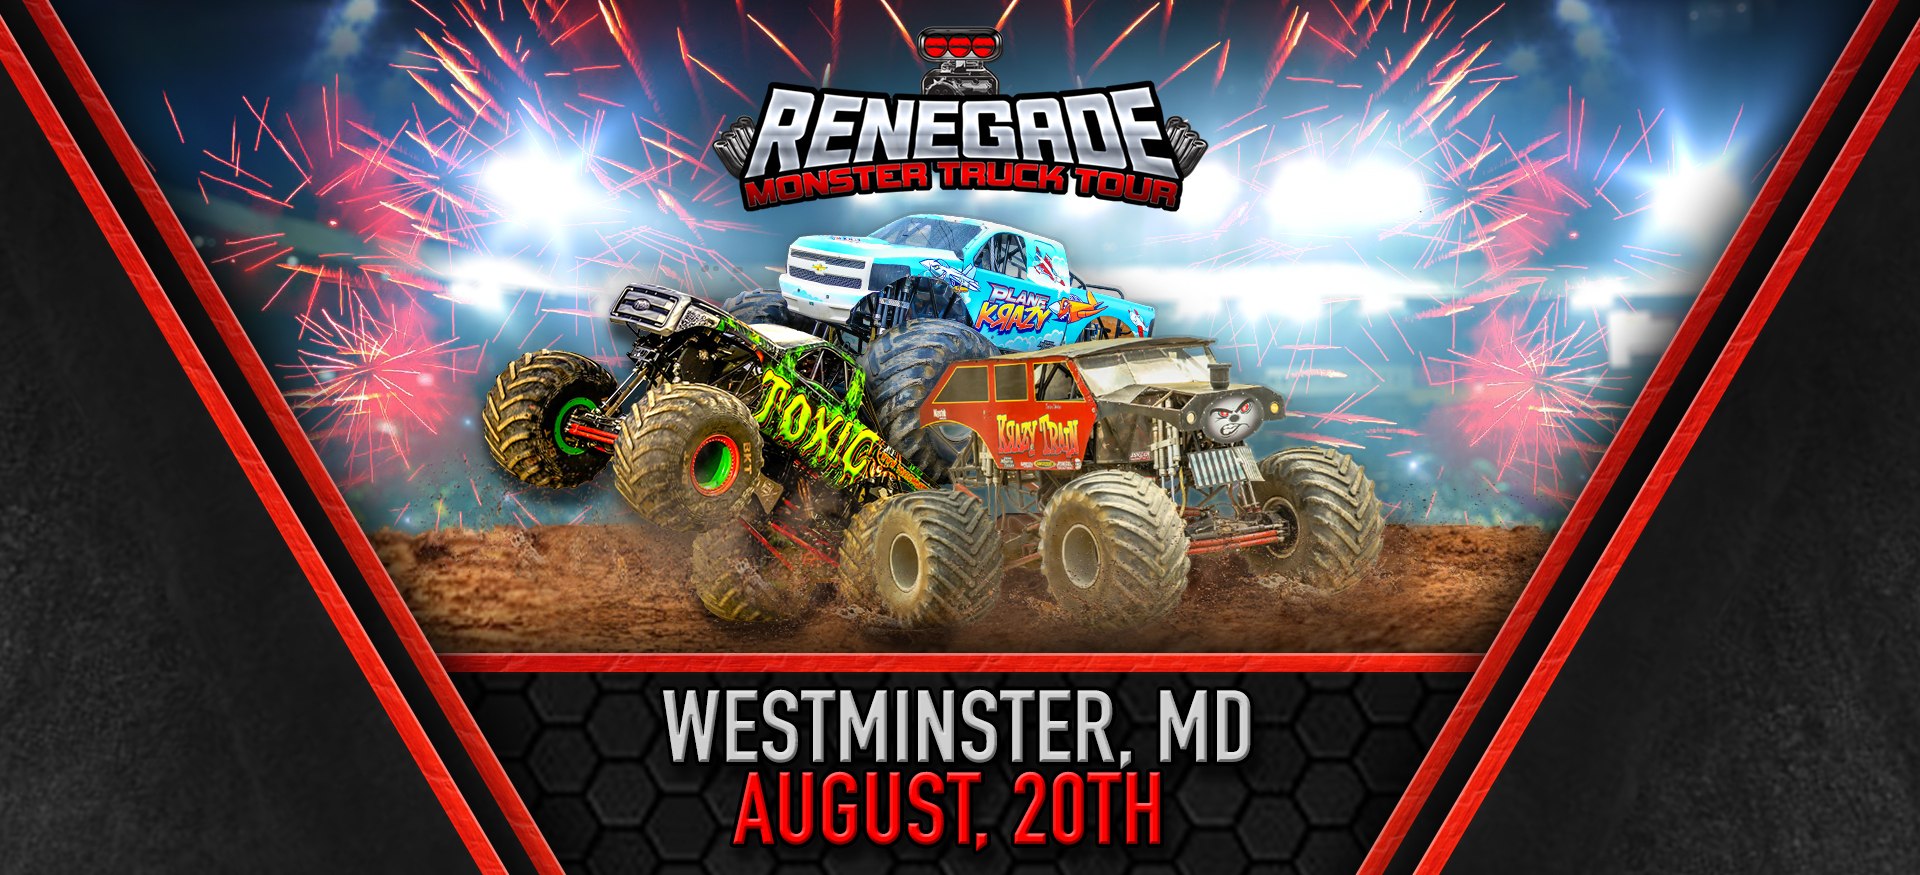 renegade monster truck tour westminster md